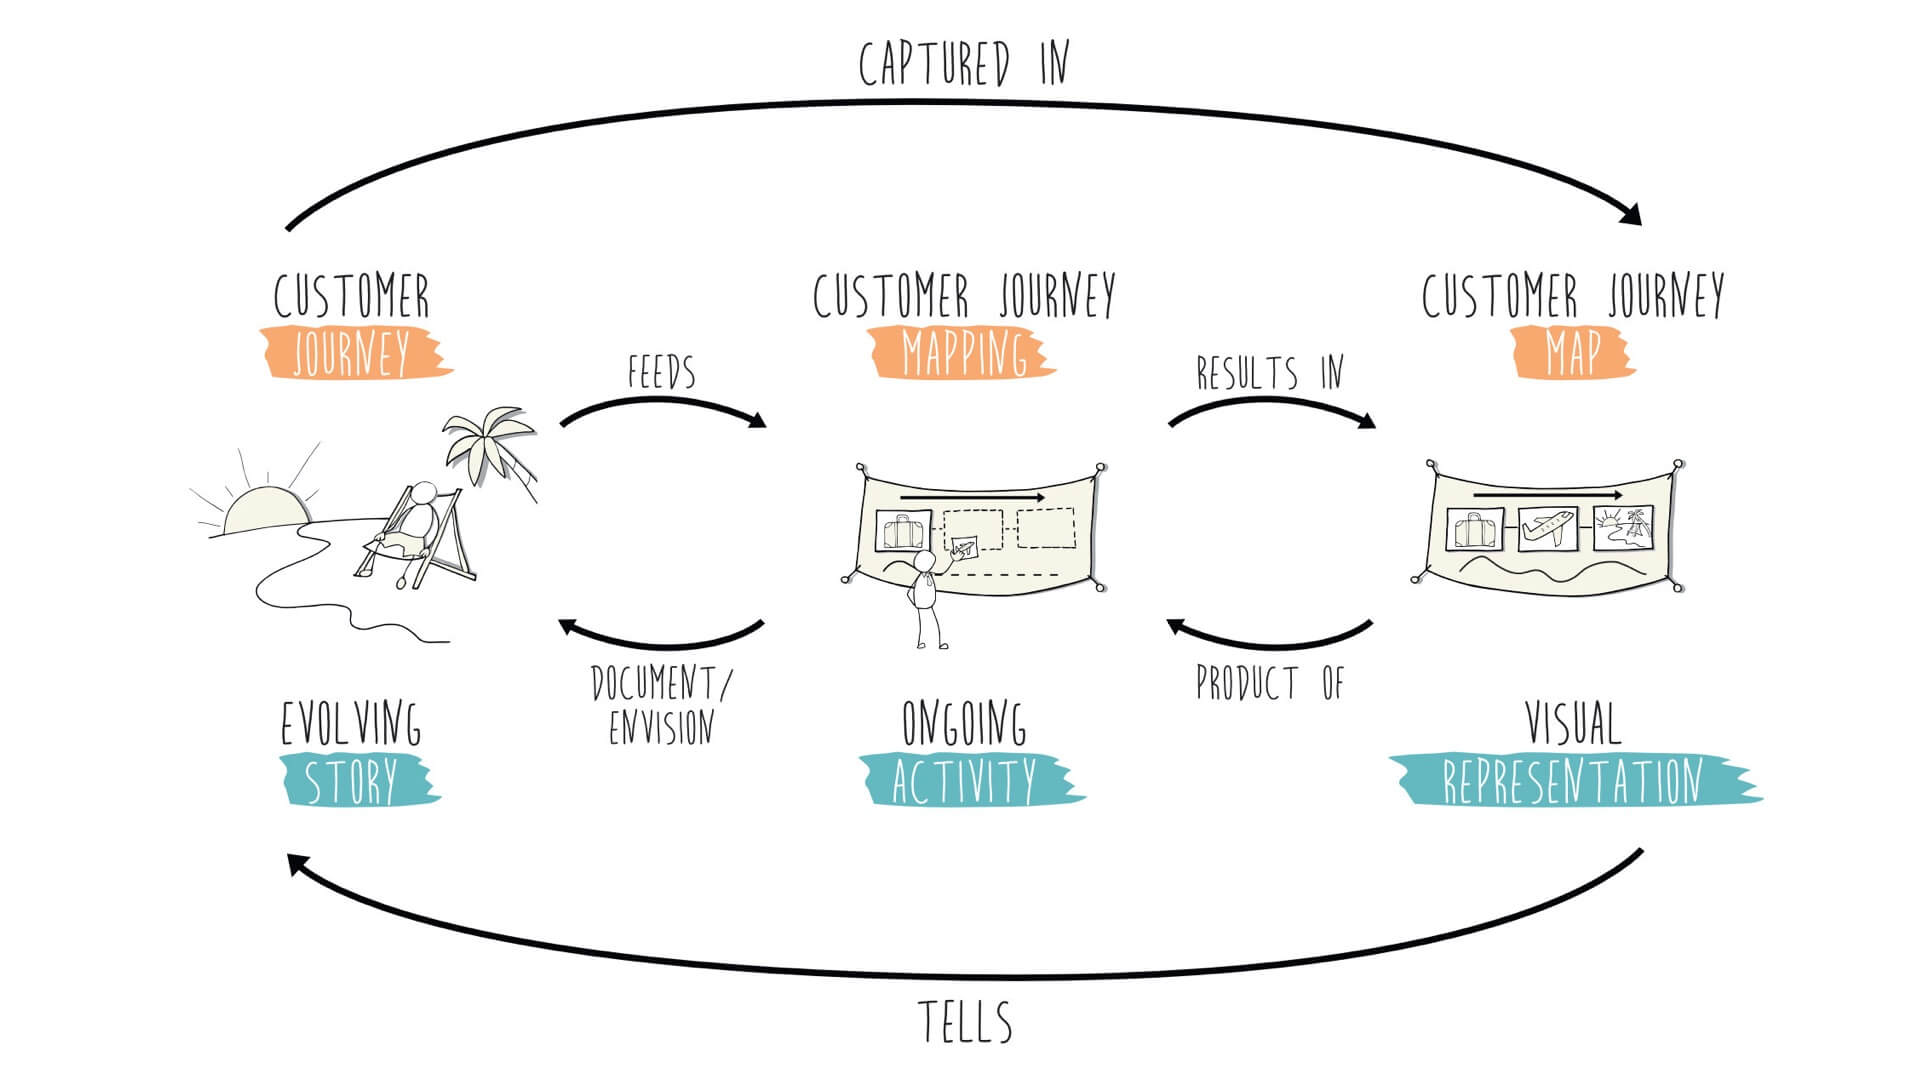 The relationship between Customer Journey Mapping, the Customer Journey and the Customer Journey Map